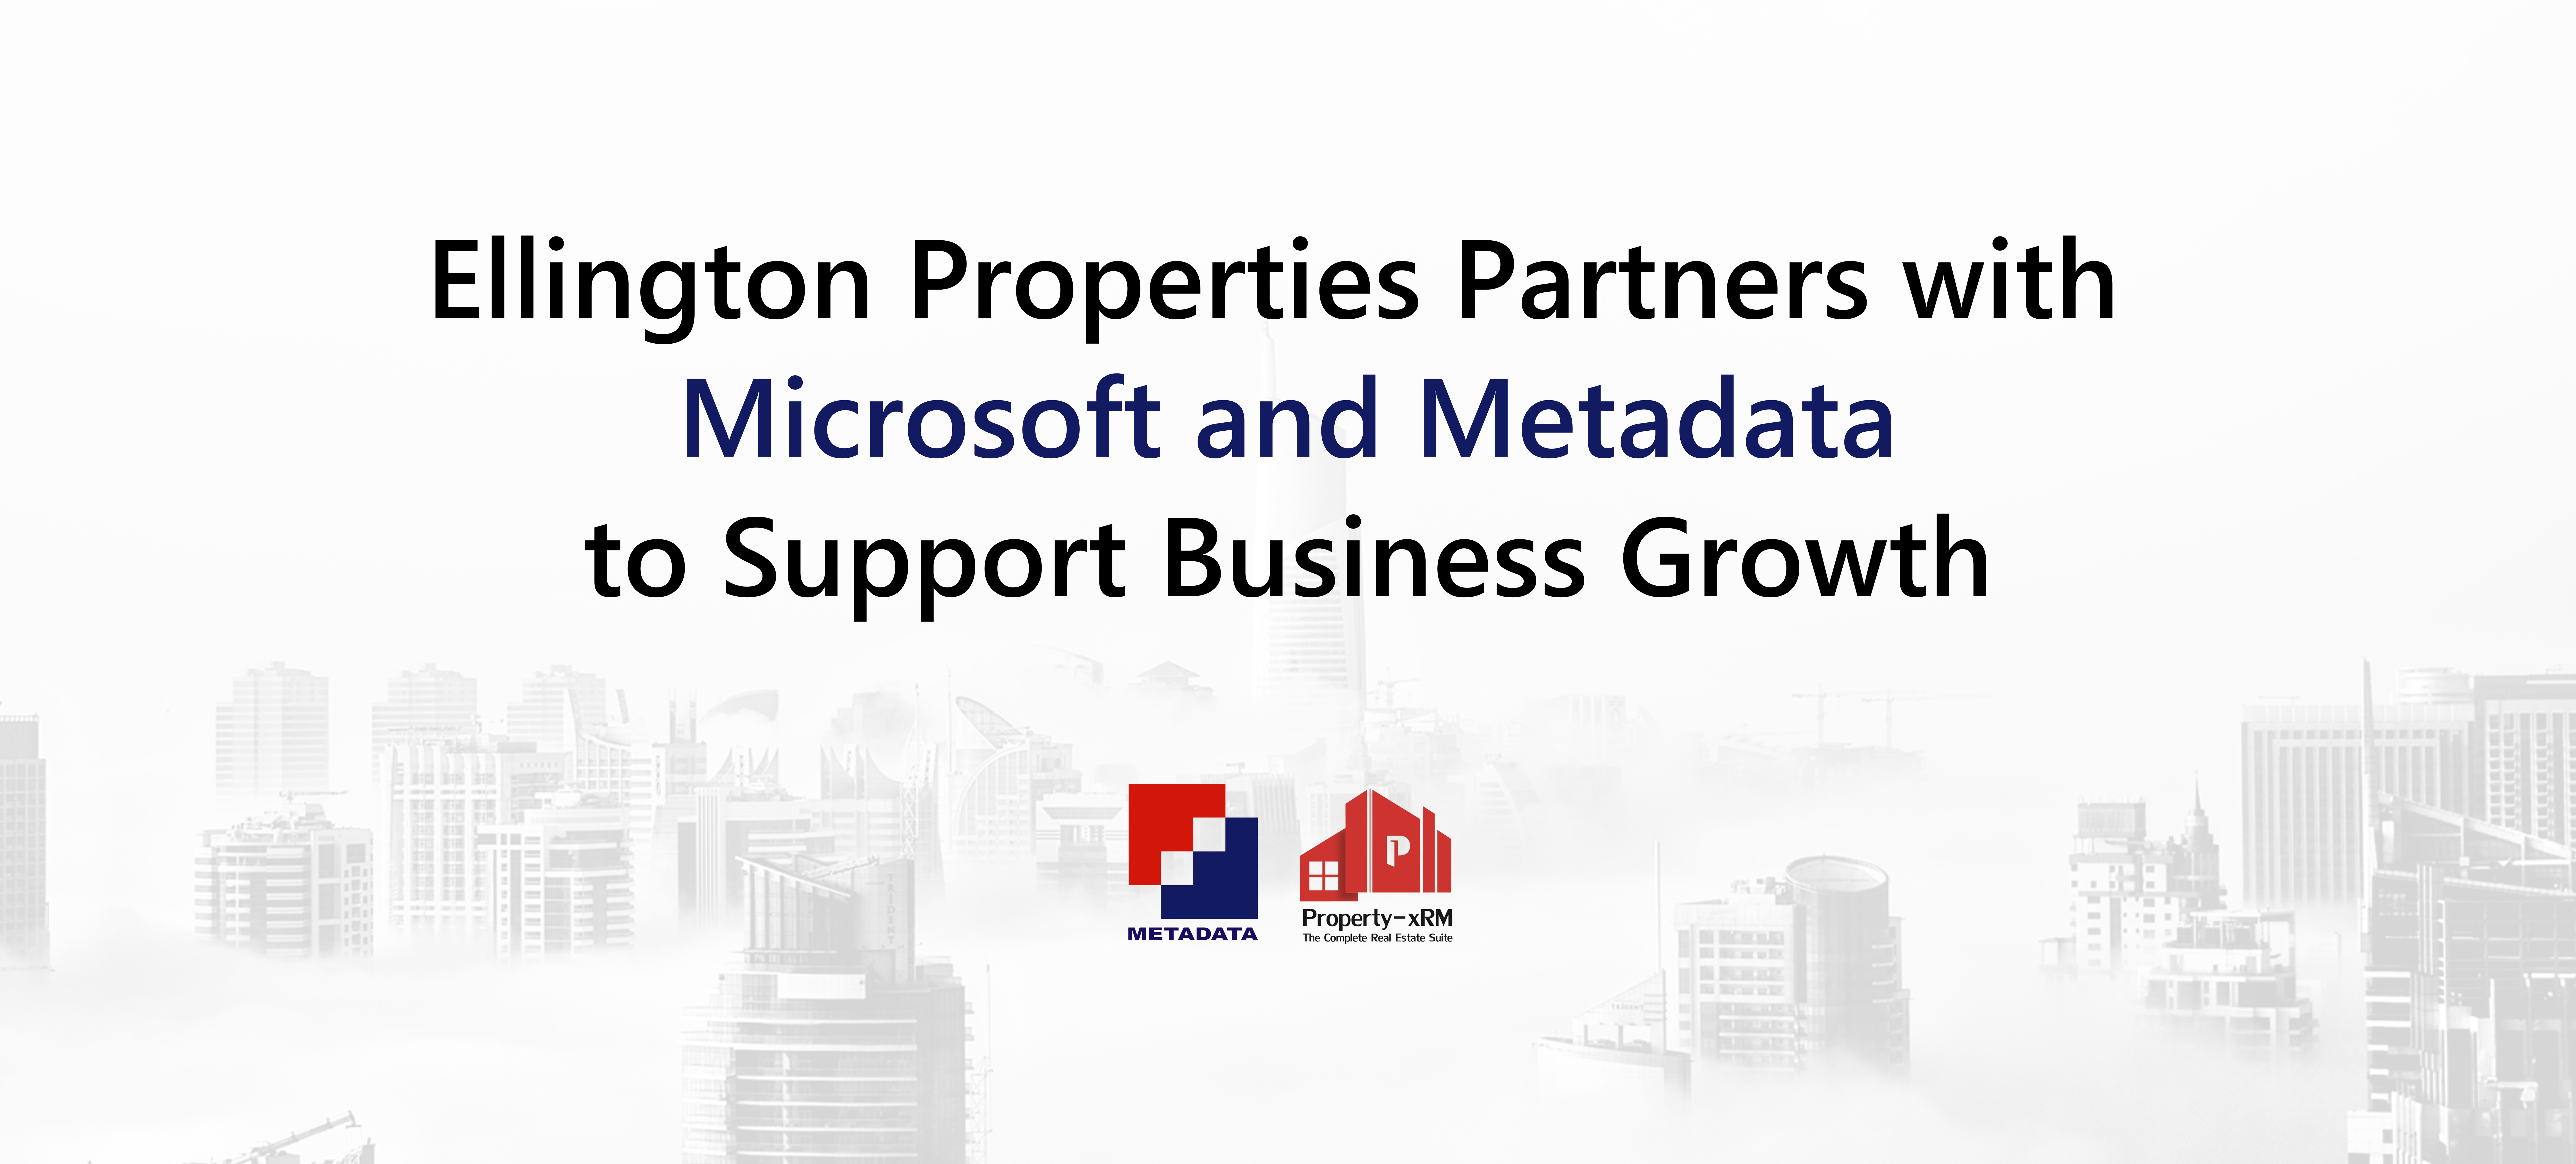 Ellington partners with Metadata and Microsoft